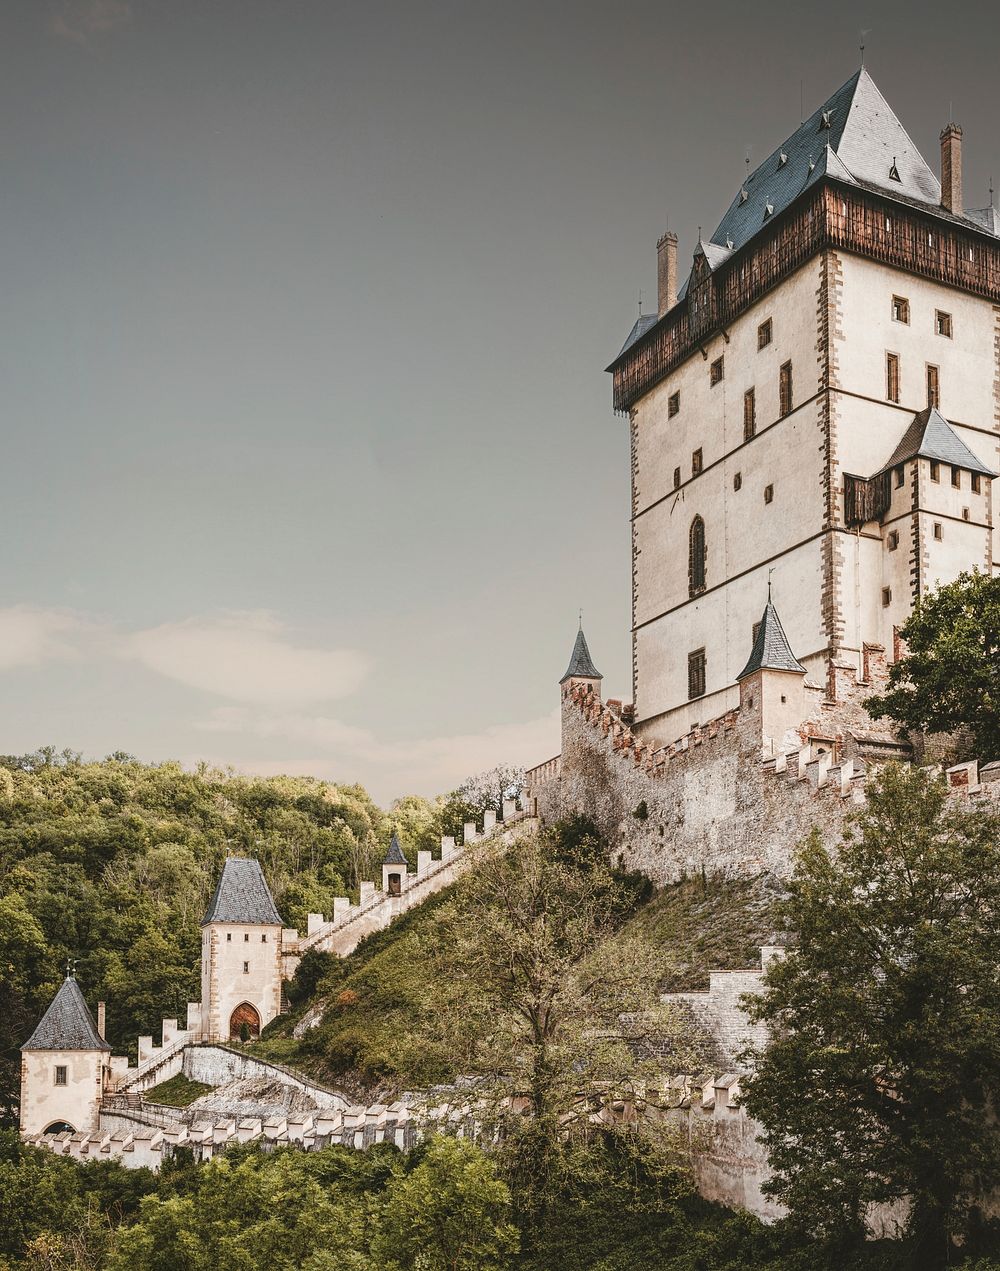 Free Karlstejn Castle, Germany photo, public domain travel CC0 image.